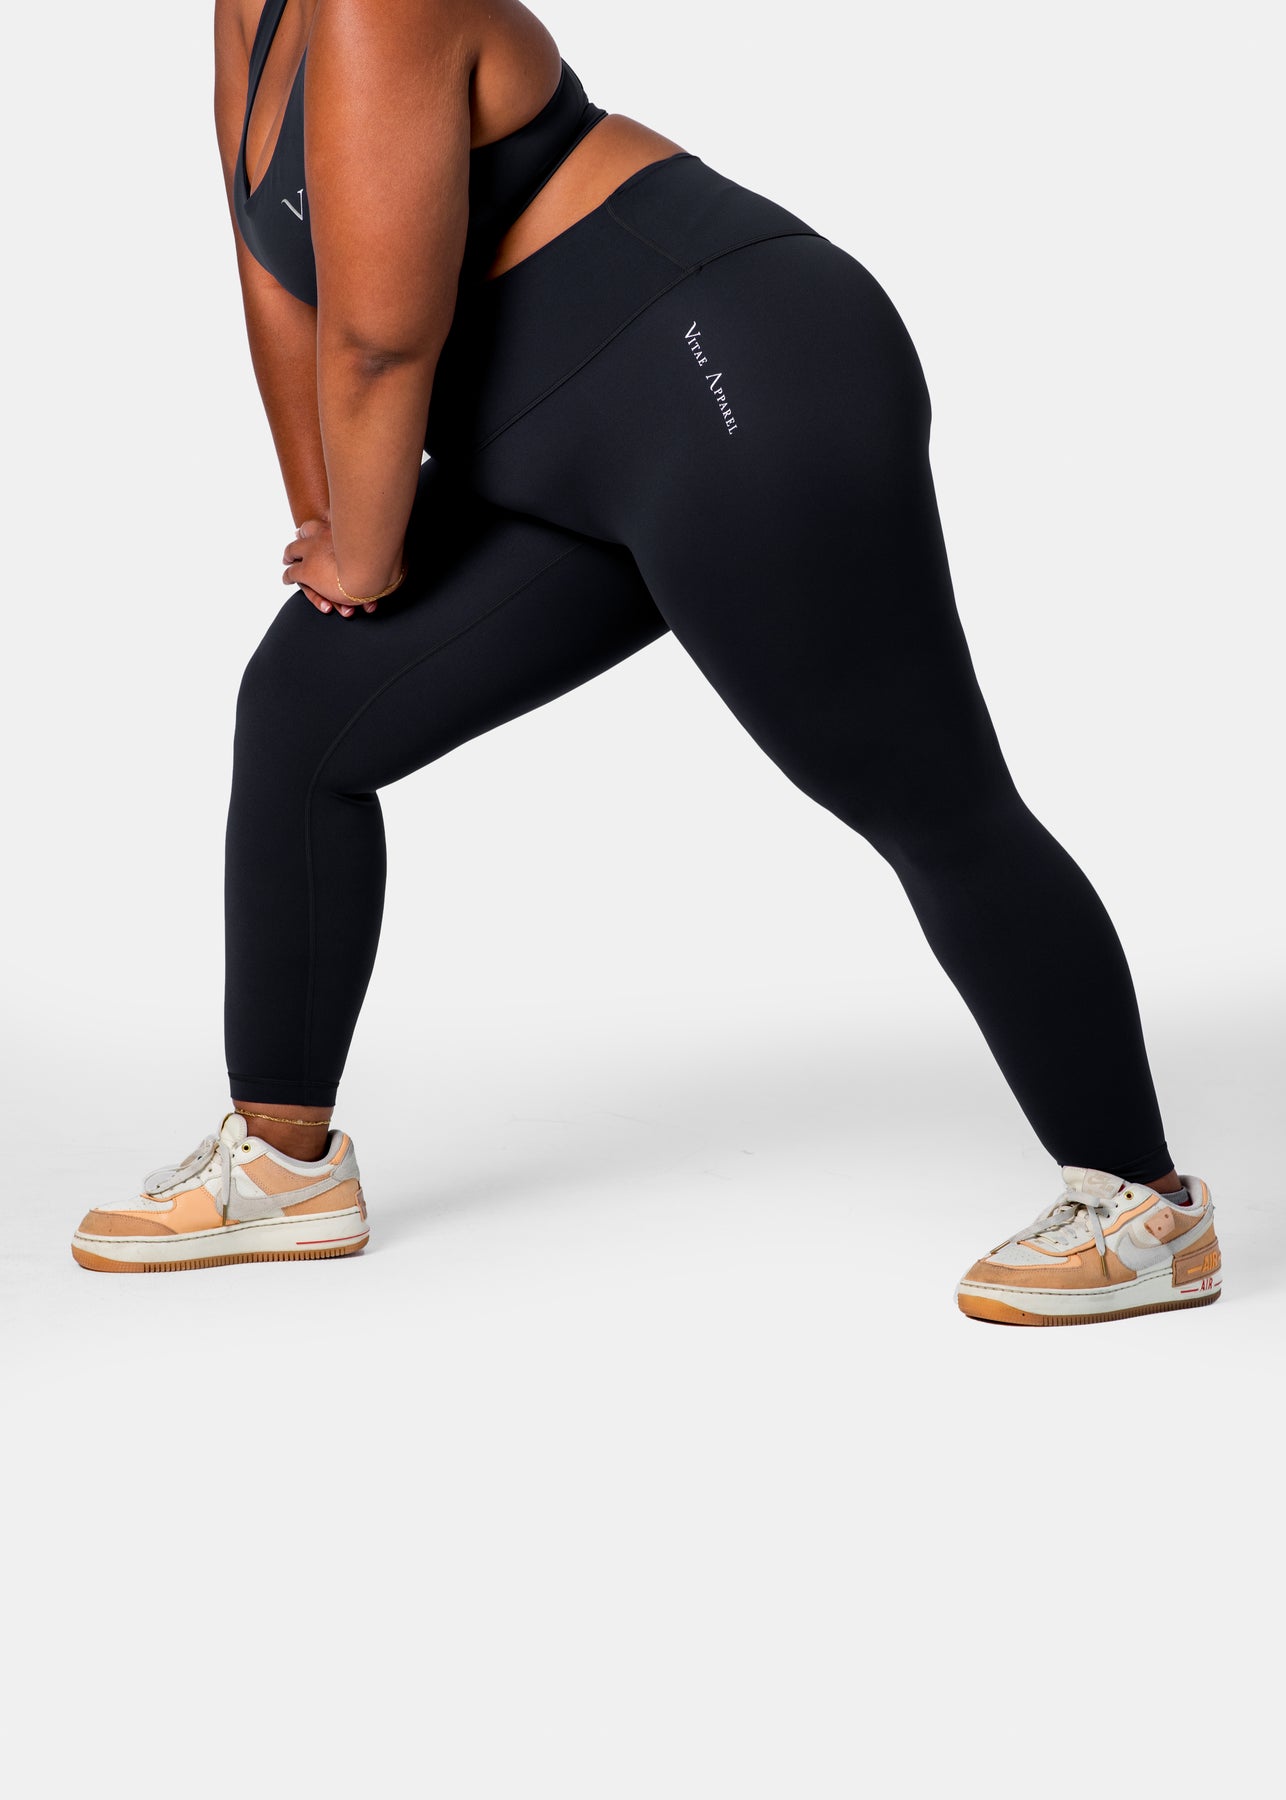 Buy Squat Proof Leggings for Gym Workout – VITAE APPAREL